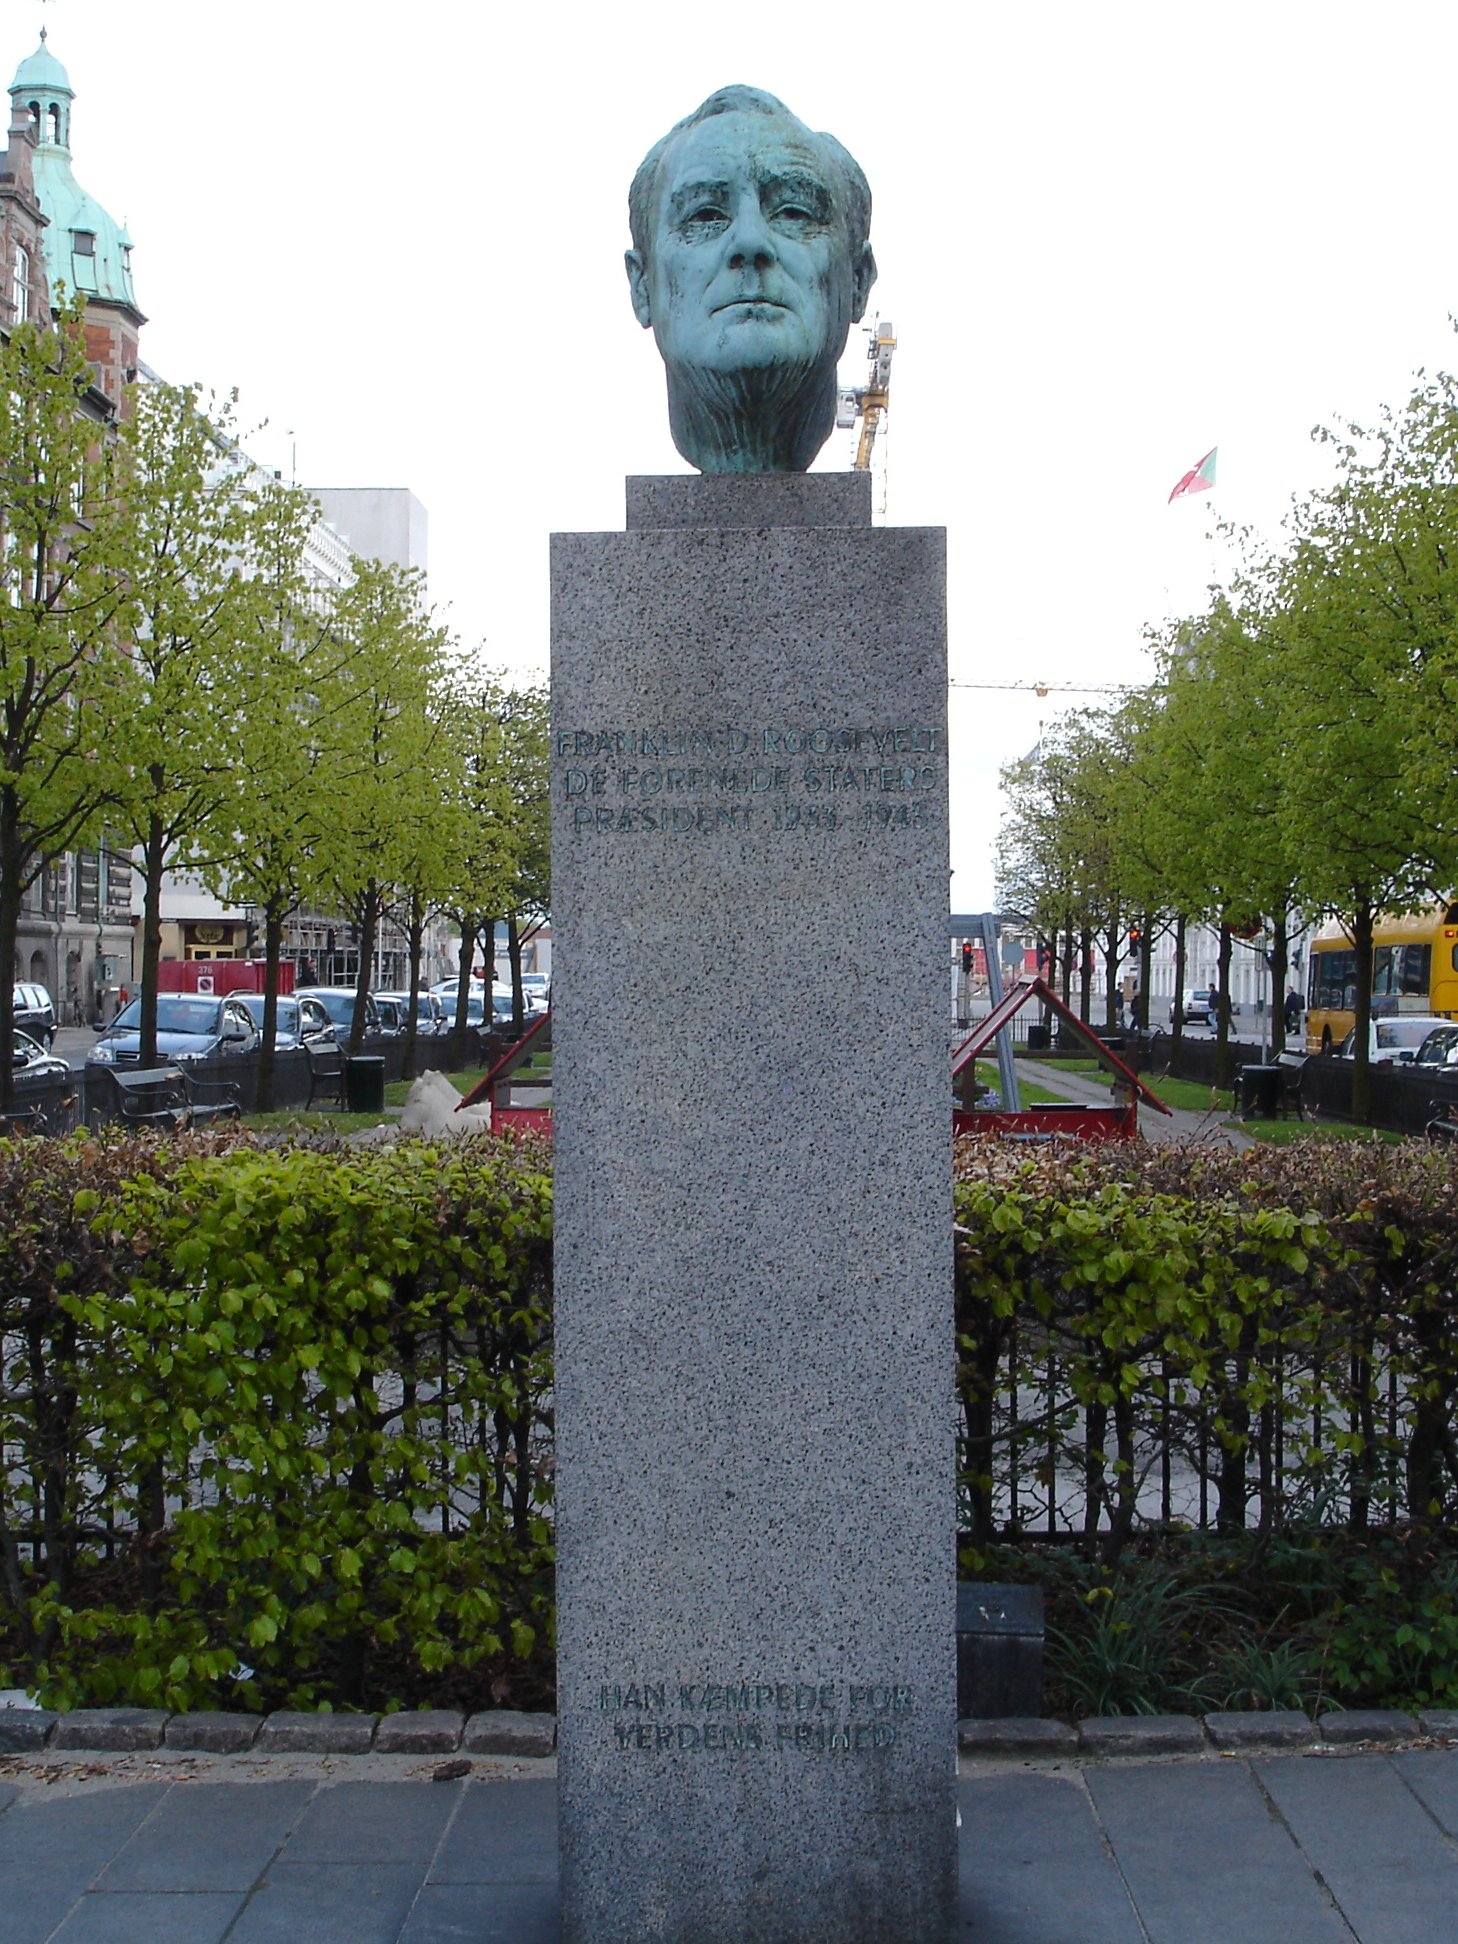 http://upload.wikimedia.org/wikipedia/commons/6/66/Franklin_D_Roosevelt_Copenhagen.jpg